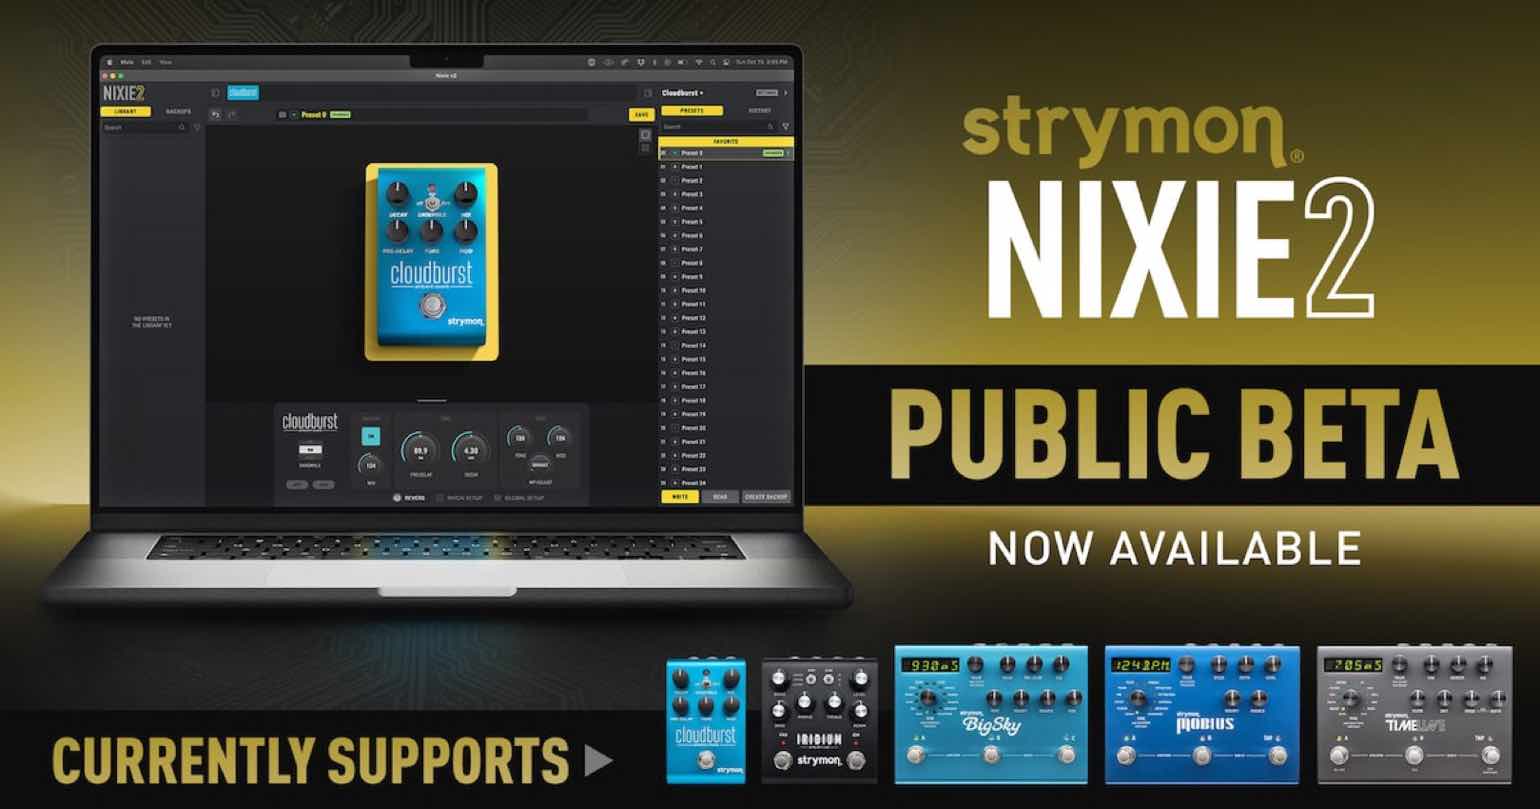 Strymon Public Beta Nixie 2